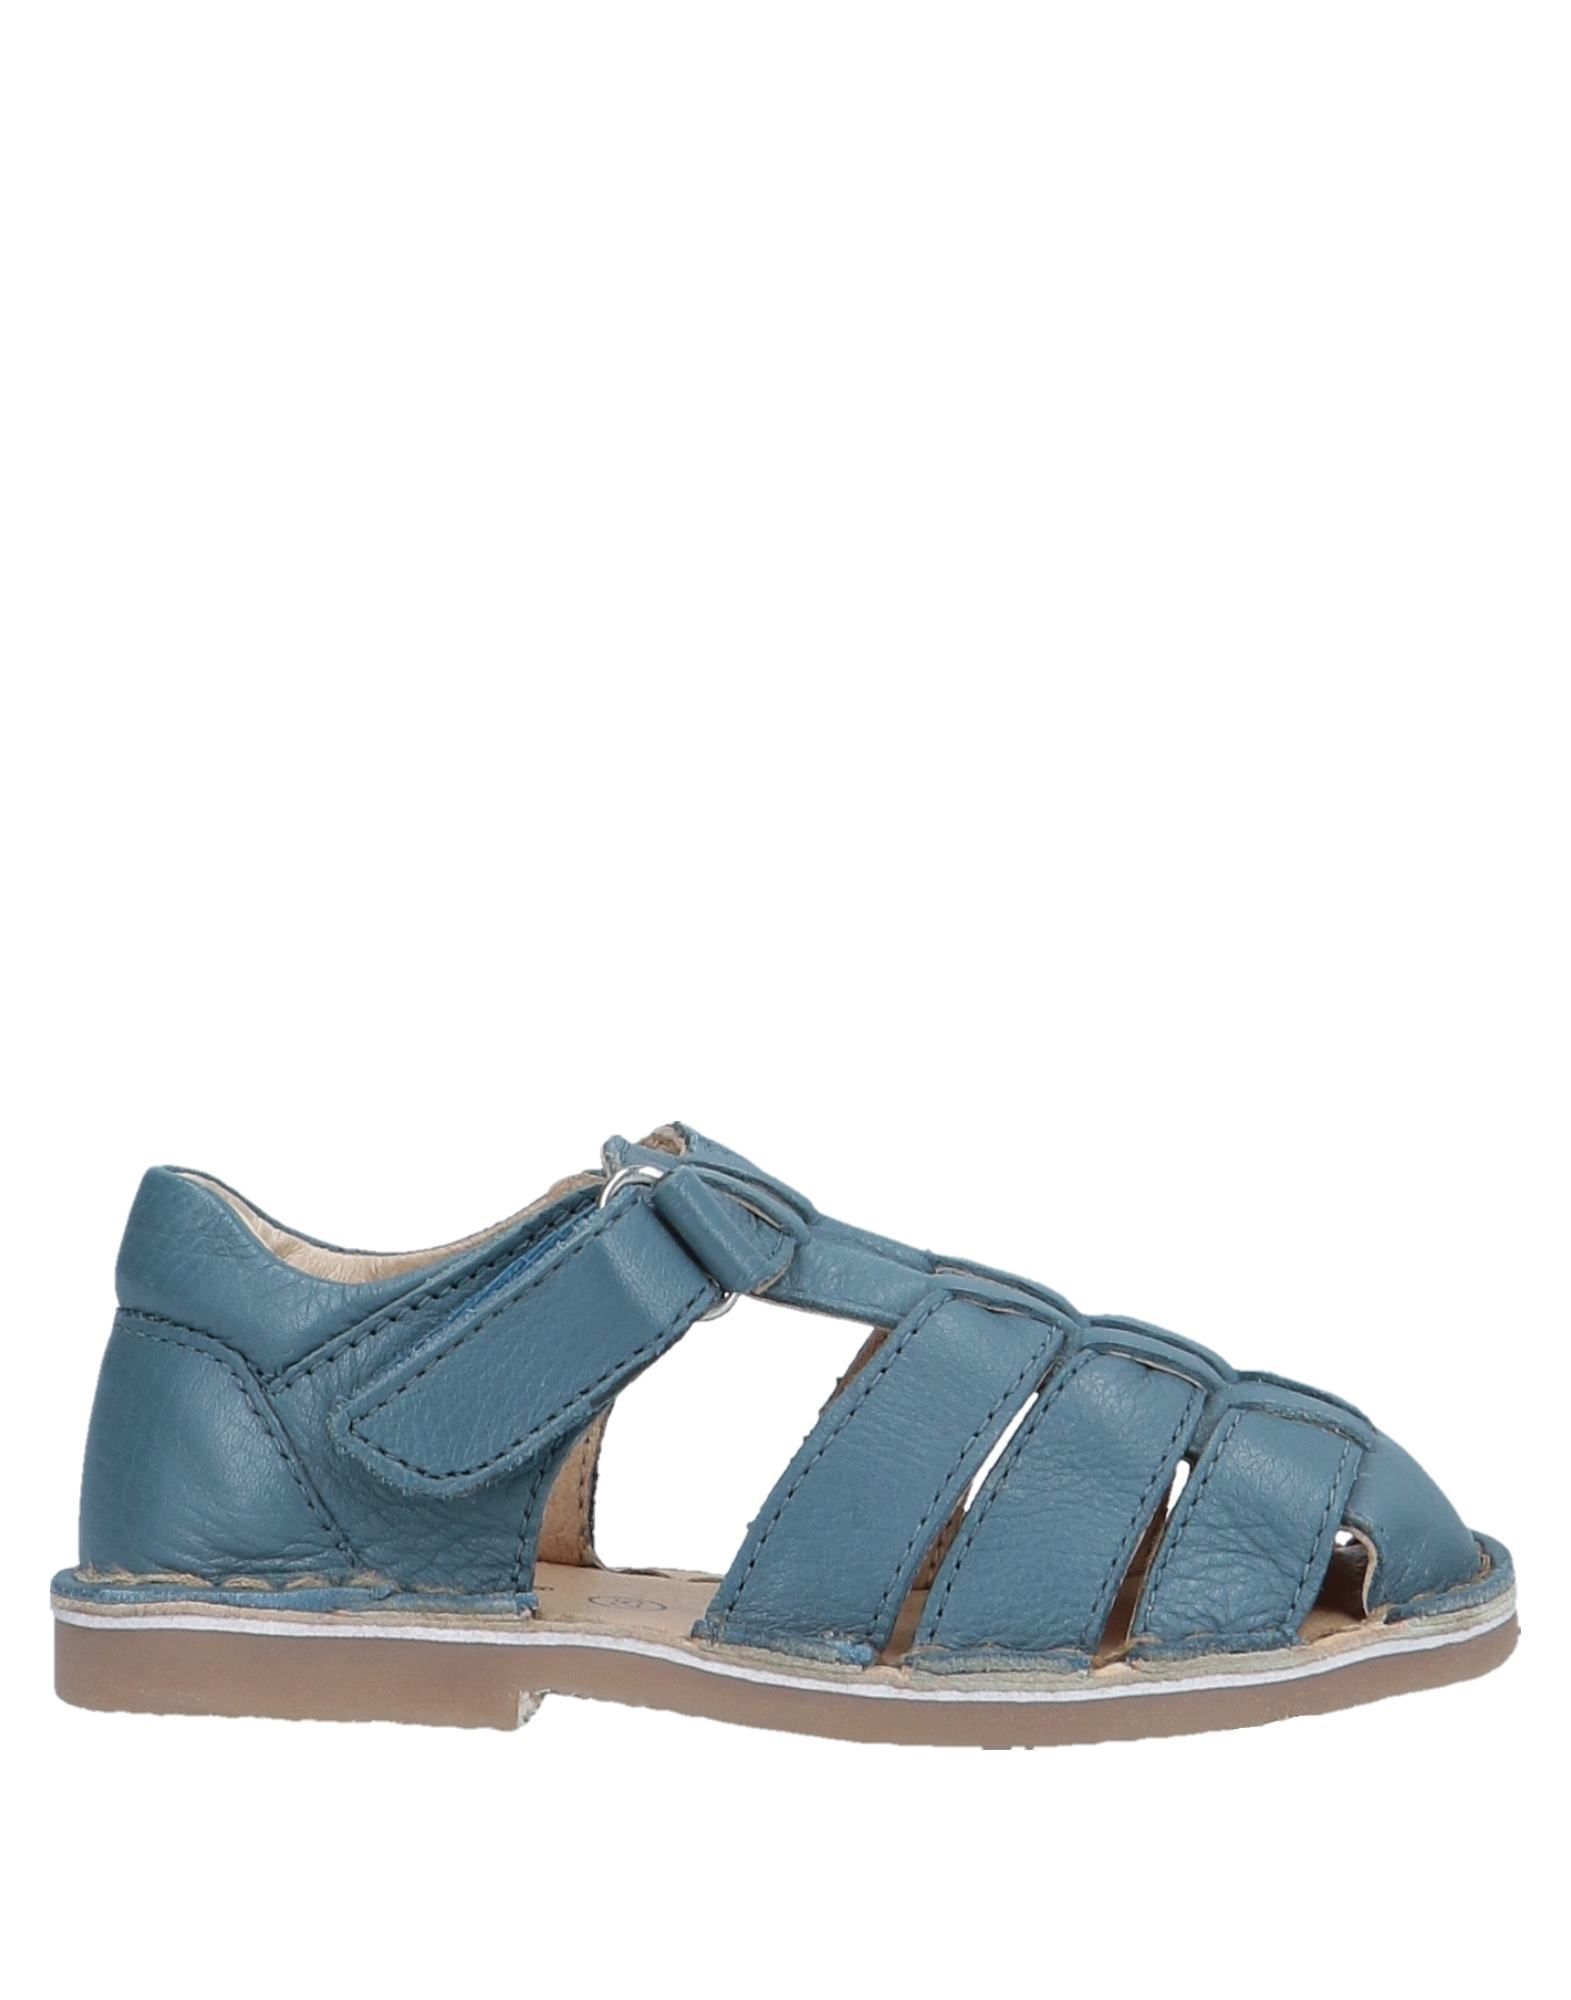 Shop Oca-loca Toddler Boy Sandals Slate Blue Size 9c Soft Leather